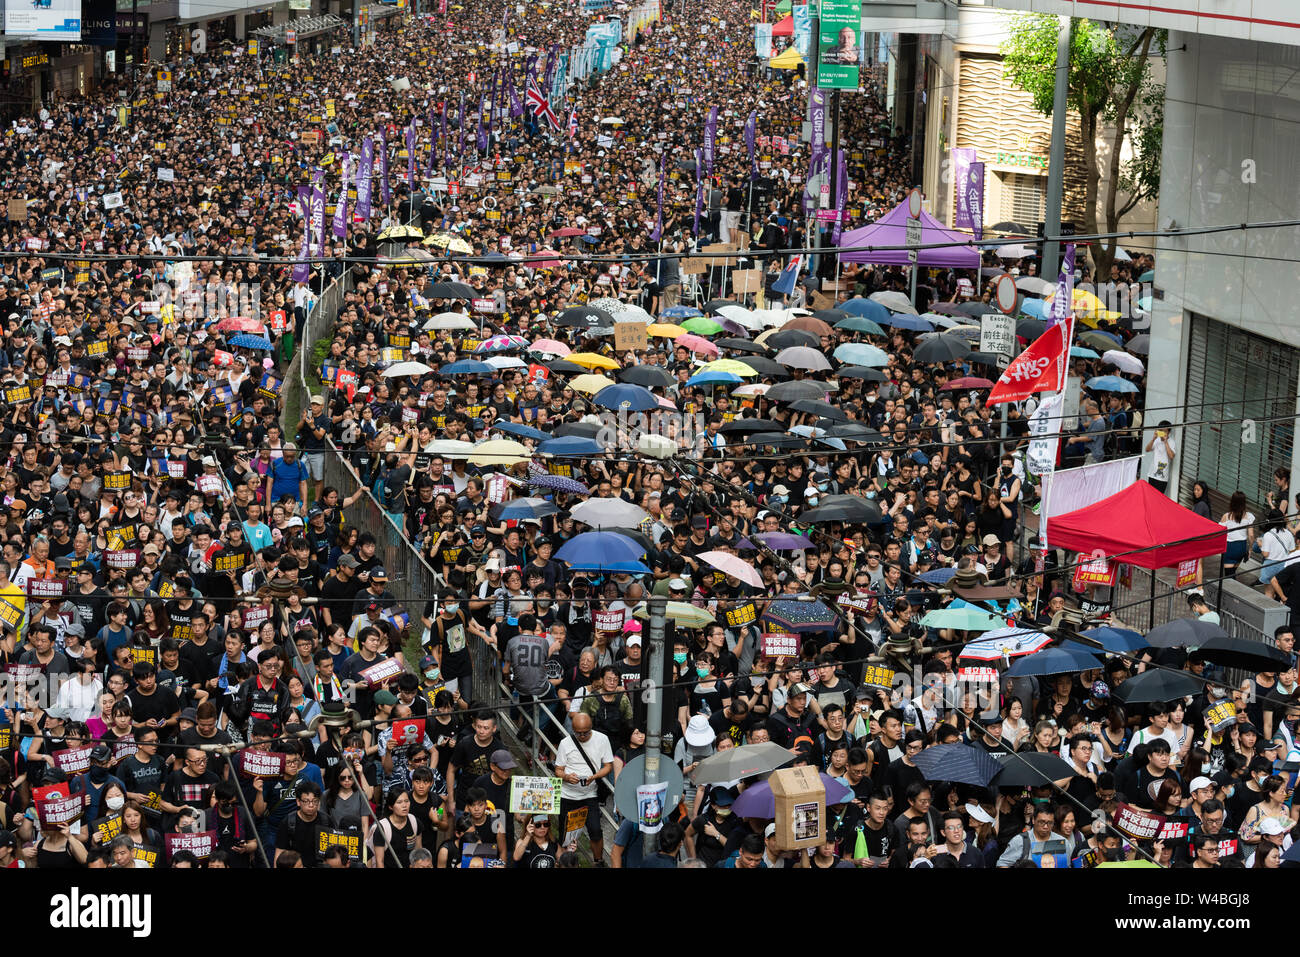 La gente protesta en las calles de Hong Kong. Más de 100.000 manifestantes salieron a las calles de Hong Kong para oponerse a un polémico proyecto de ley de extradición. Foto de stock